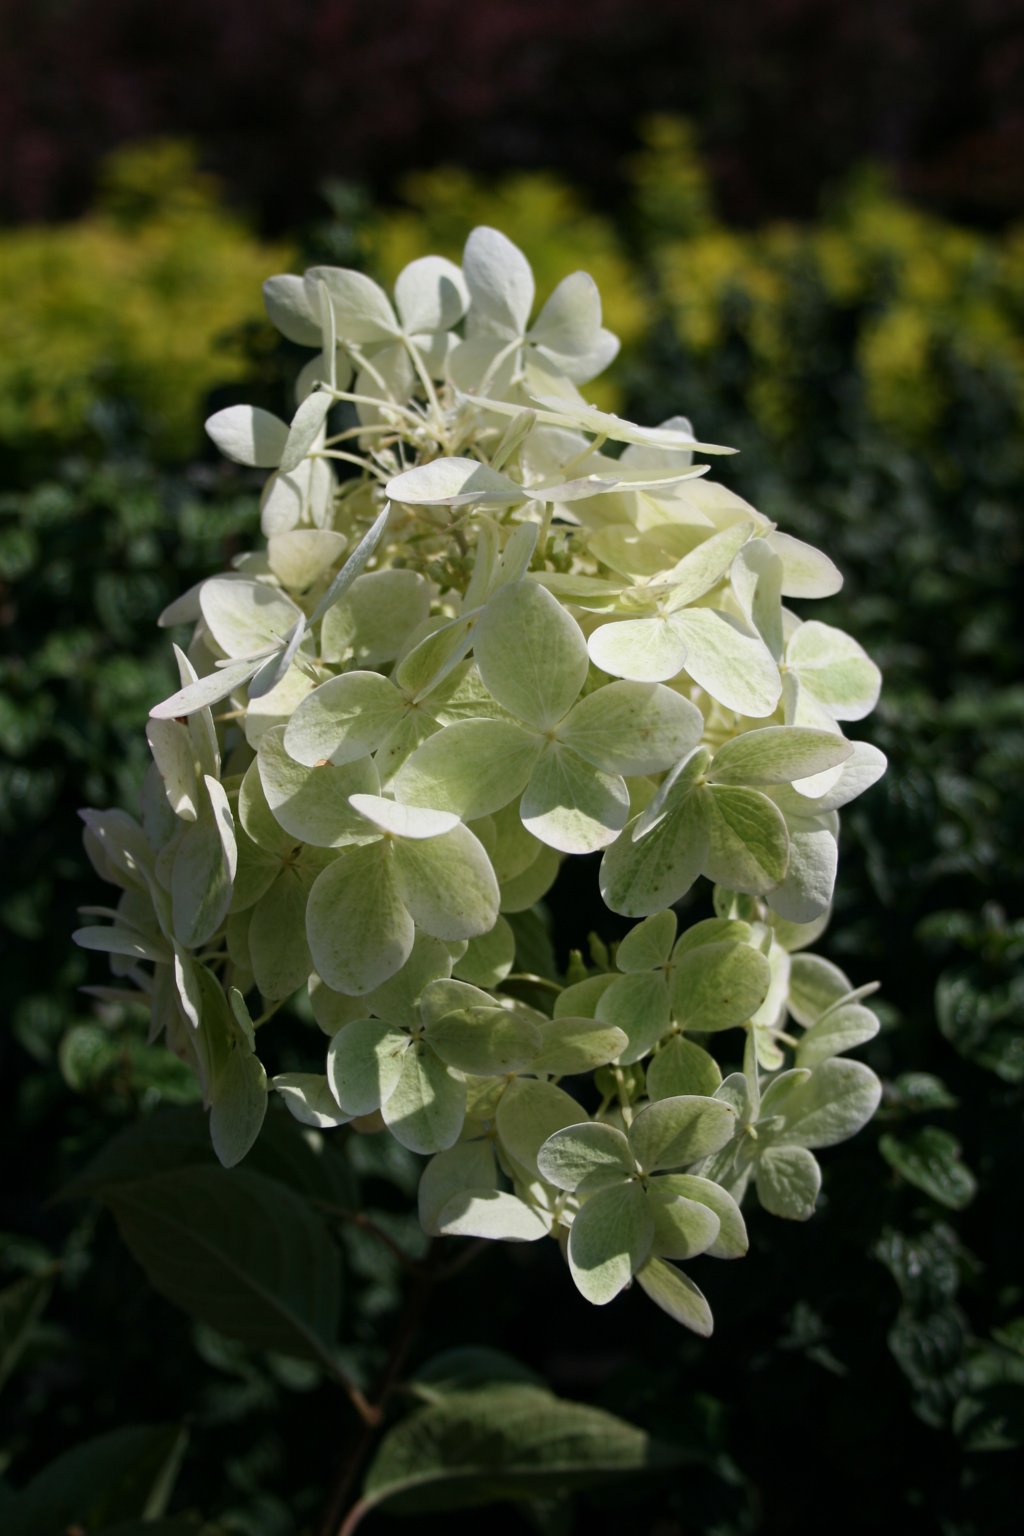 Hortensja bukietowa "Unique" / Hydrangea paniculata "Unique"